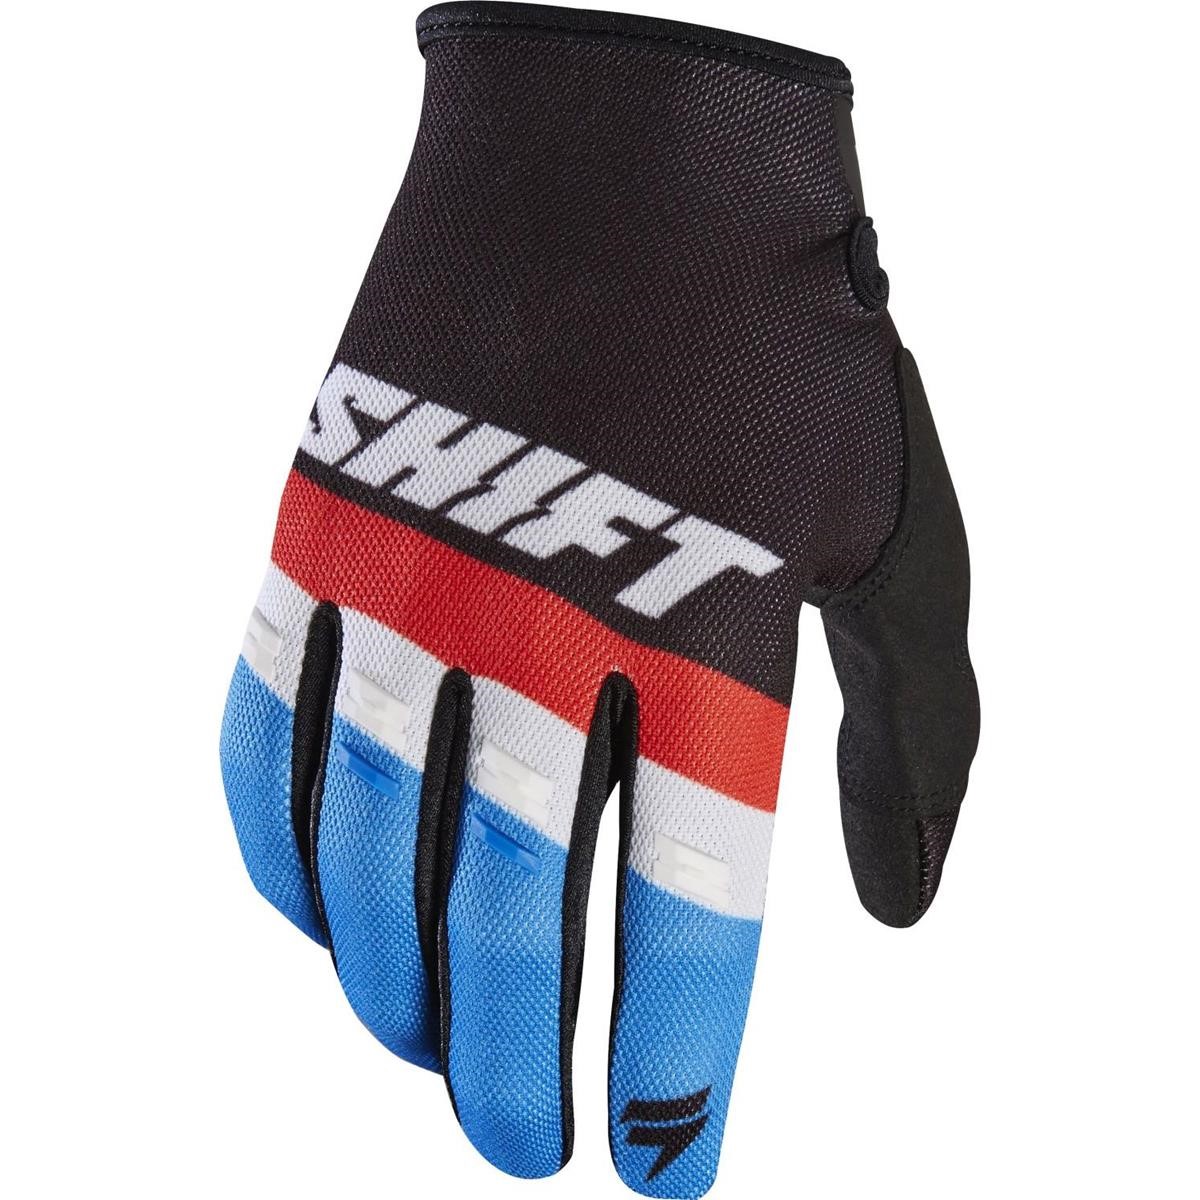 Shift Handschuhe Whit3 Air Schwarz -Tarmac